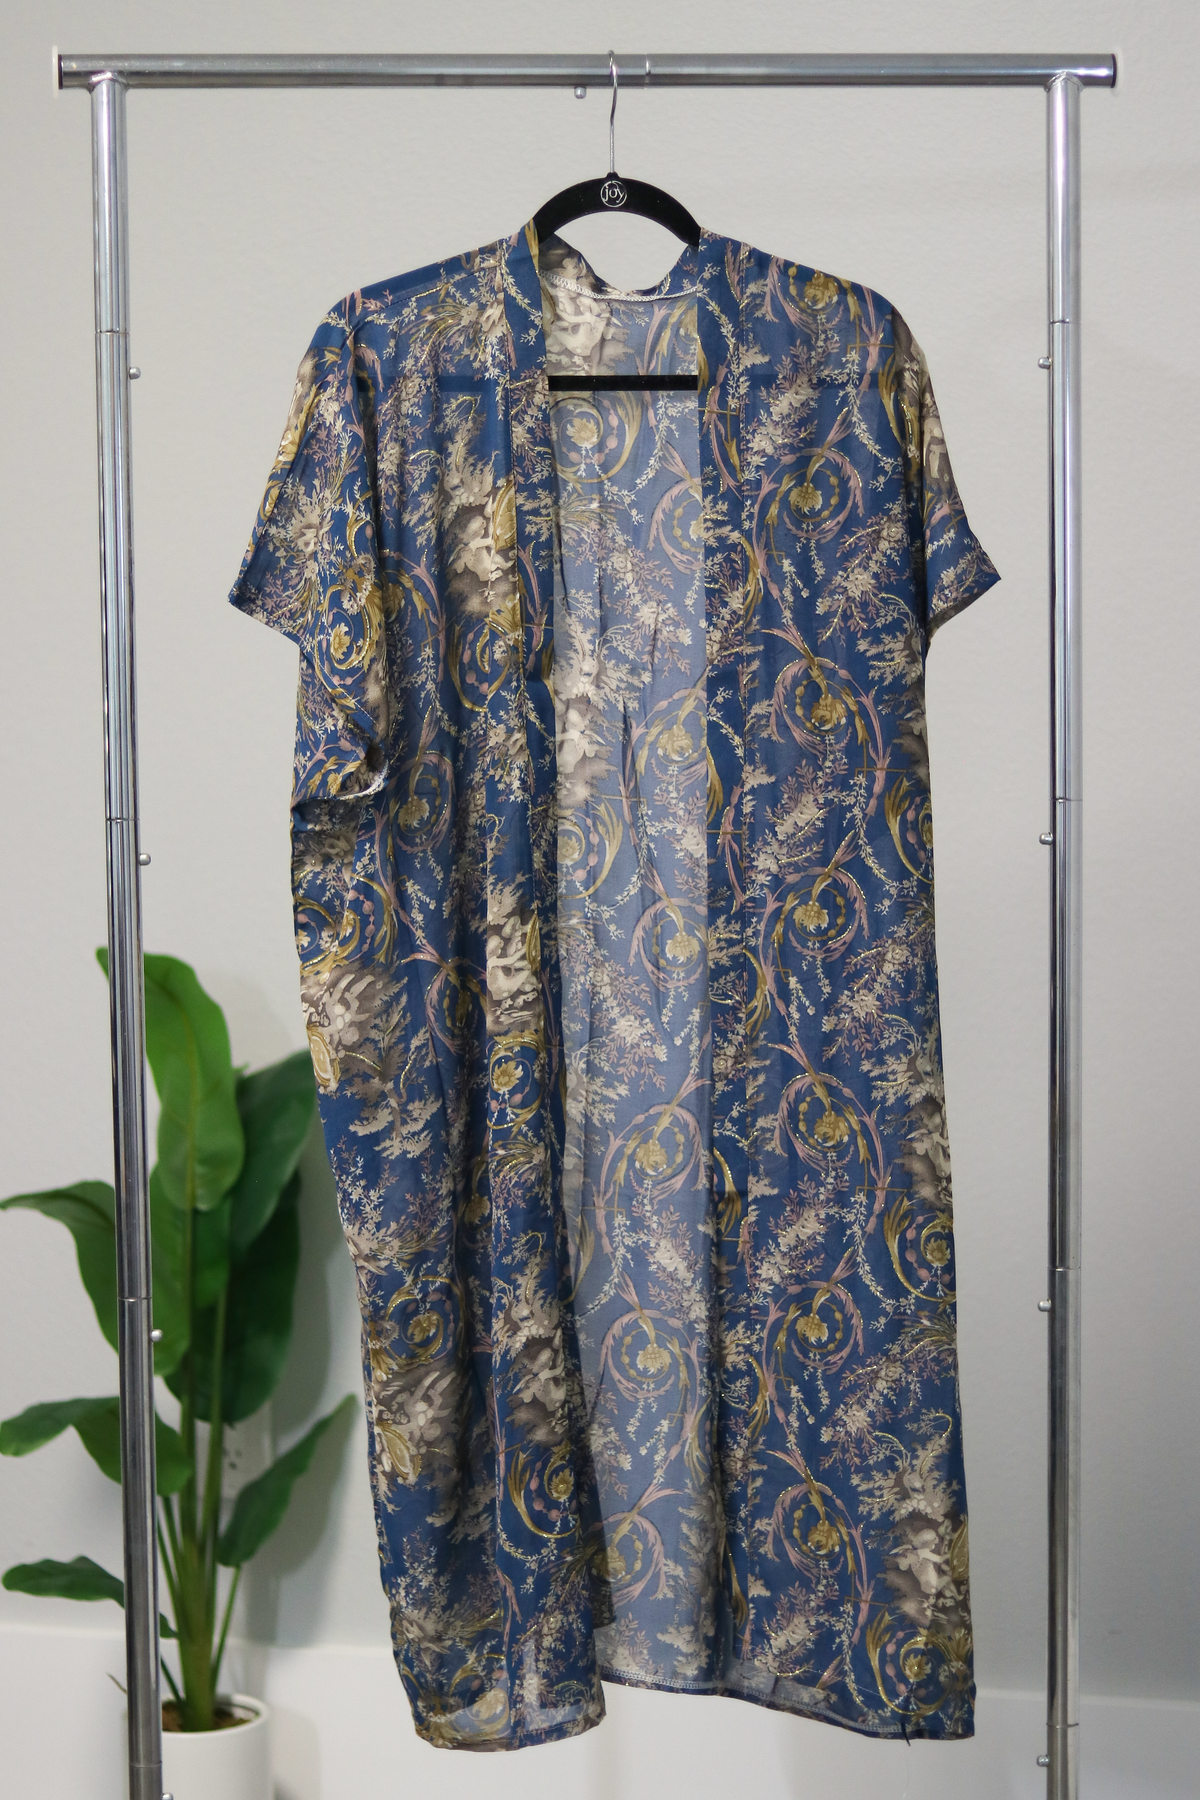 Floral Printed Kimono